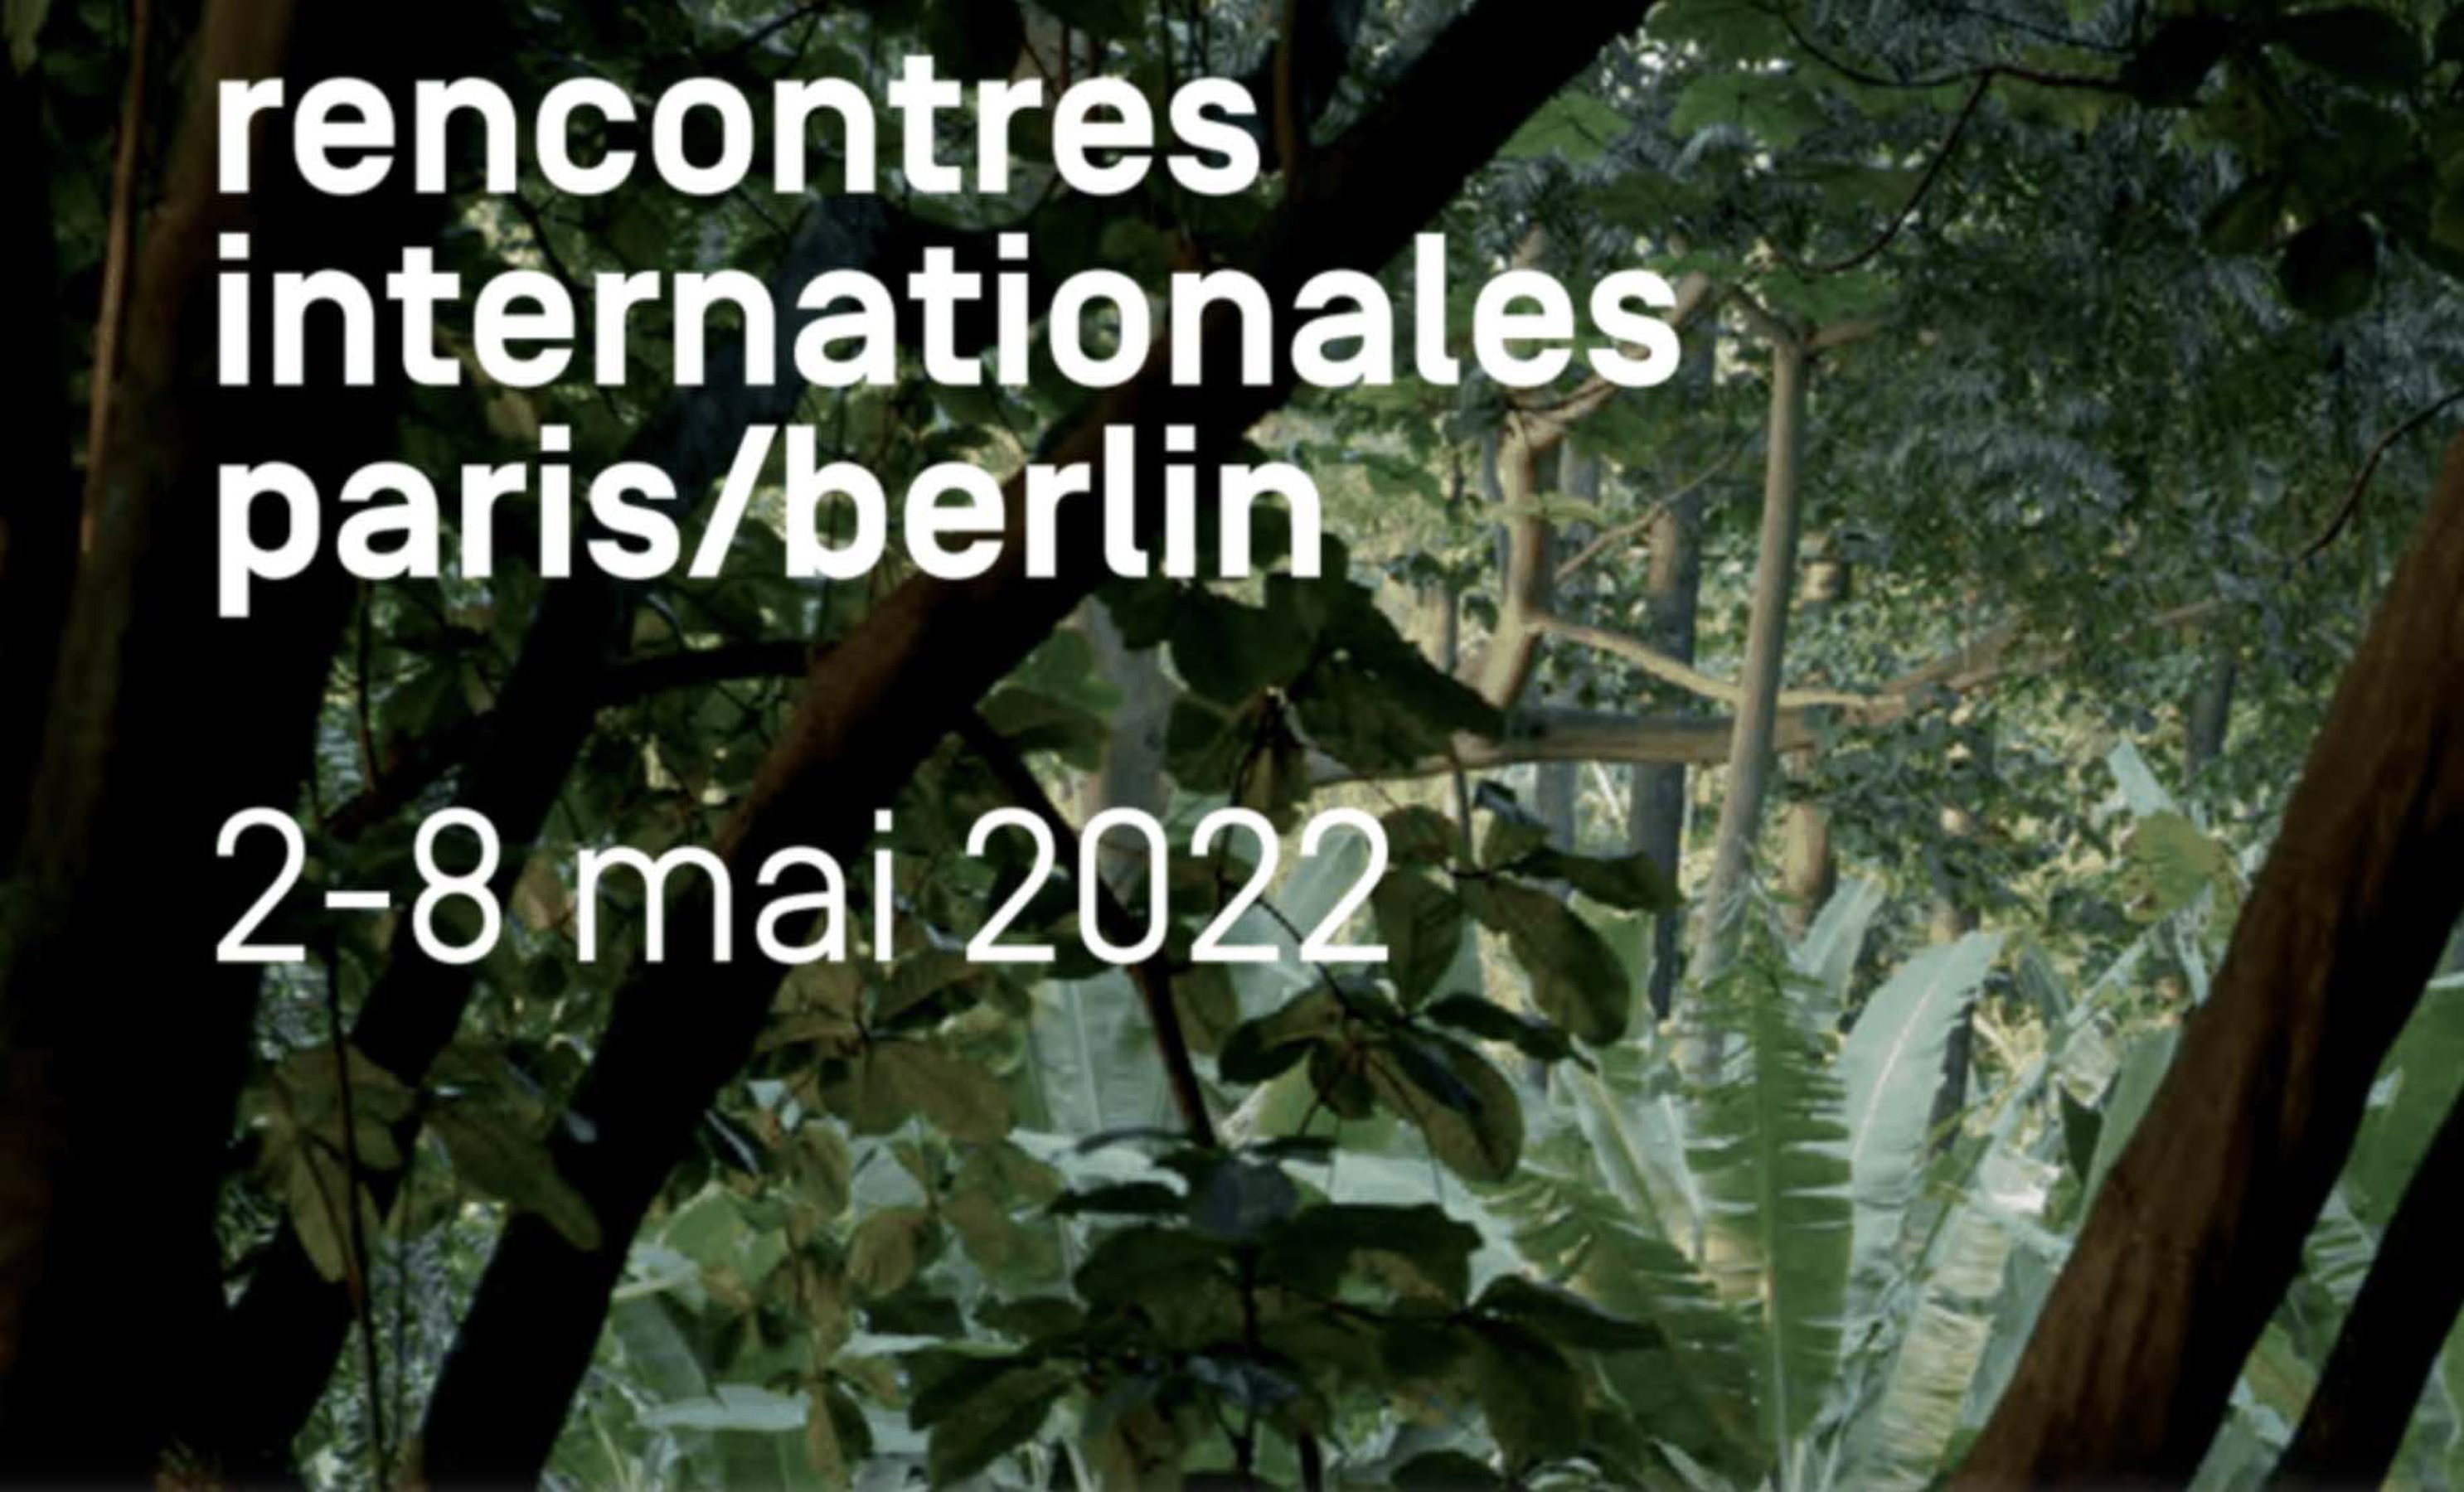 Les Rencontres Internationales Paris/Berlin 2022